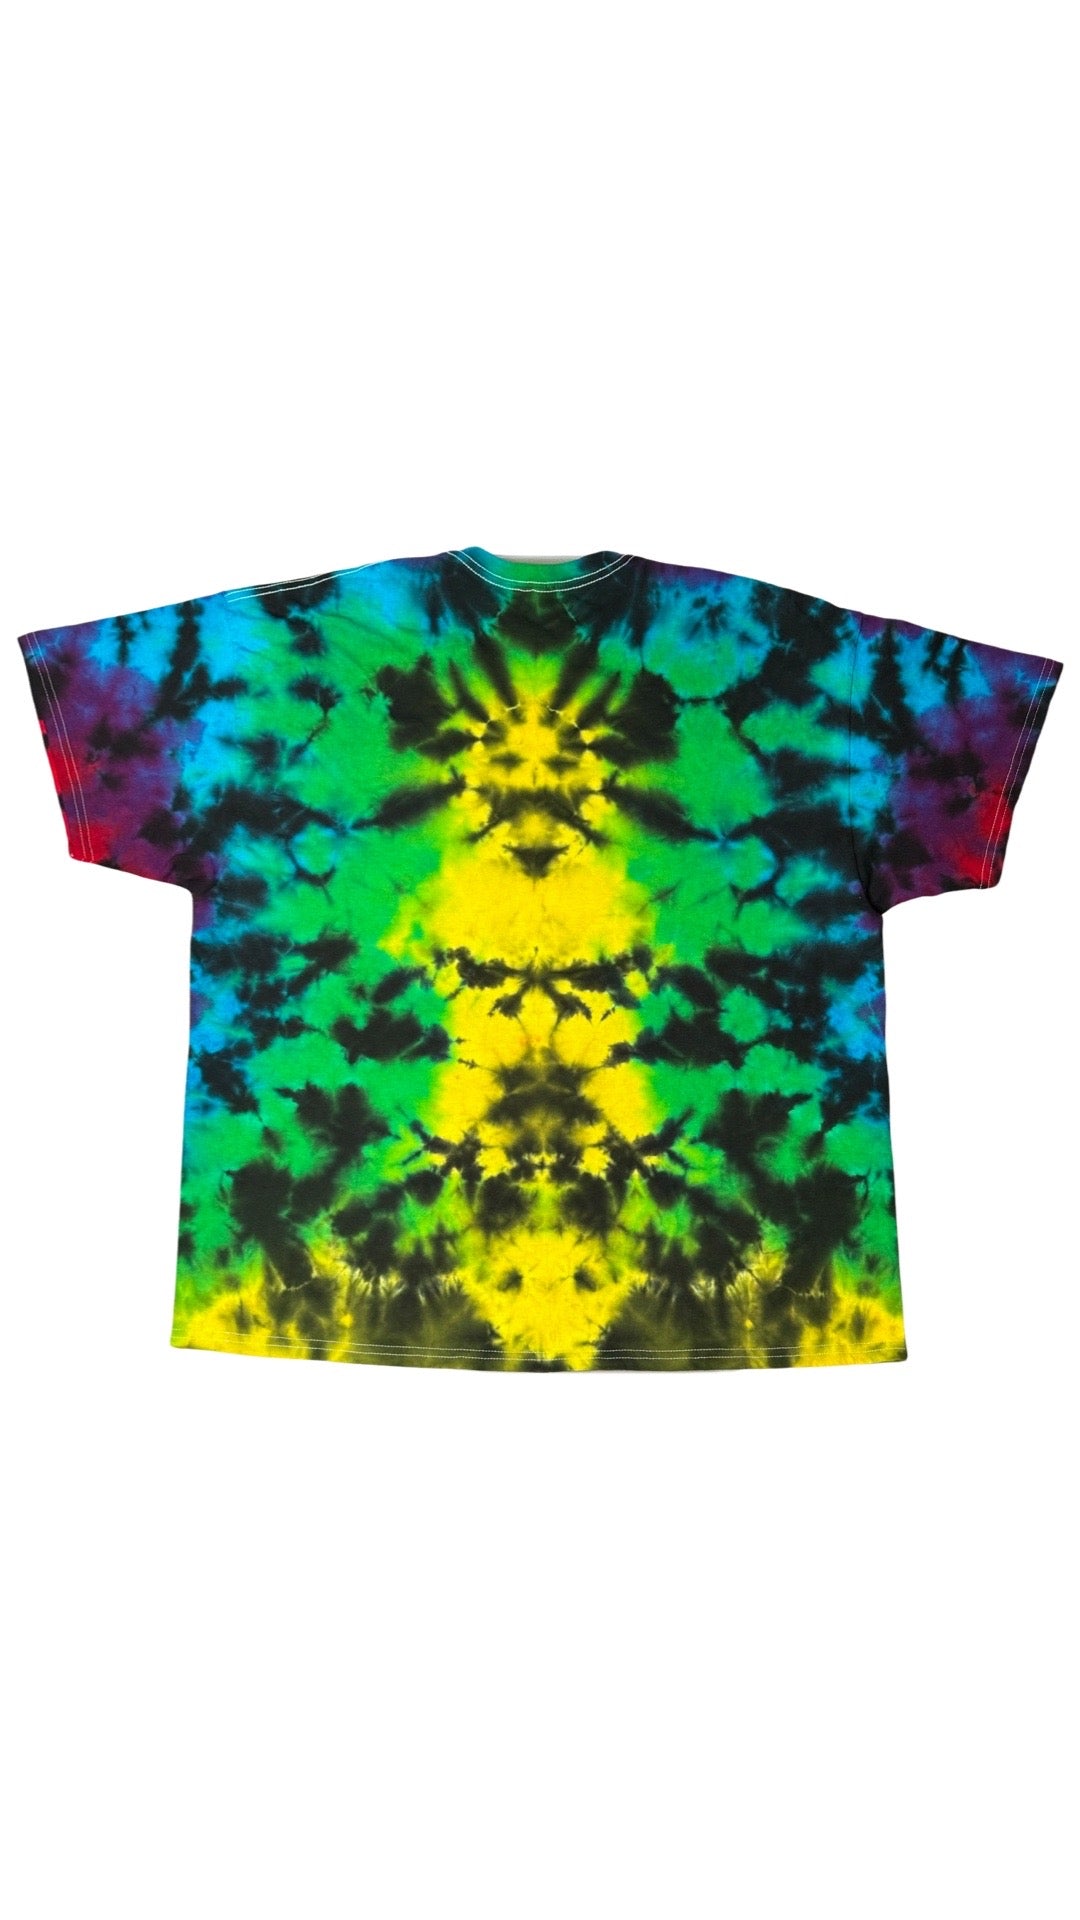 Rainbow Skull Tie Dye Tee Shirt